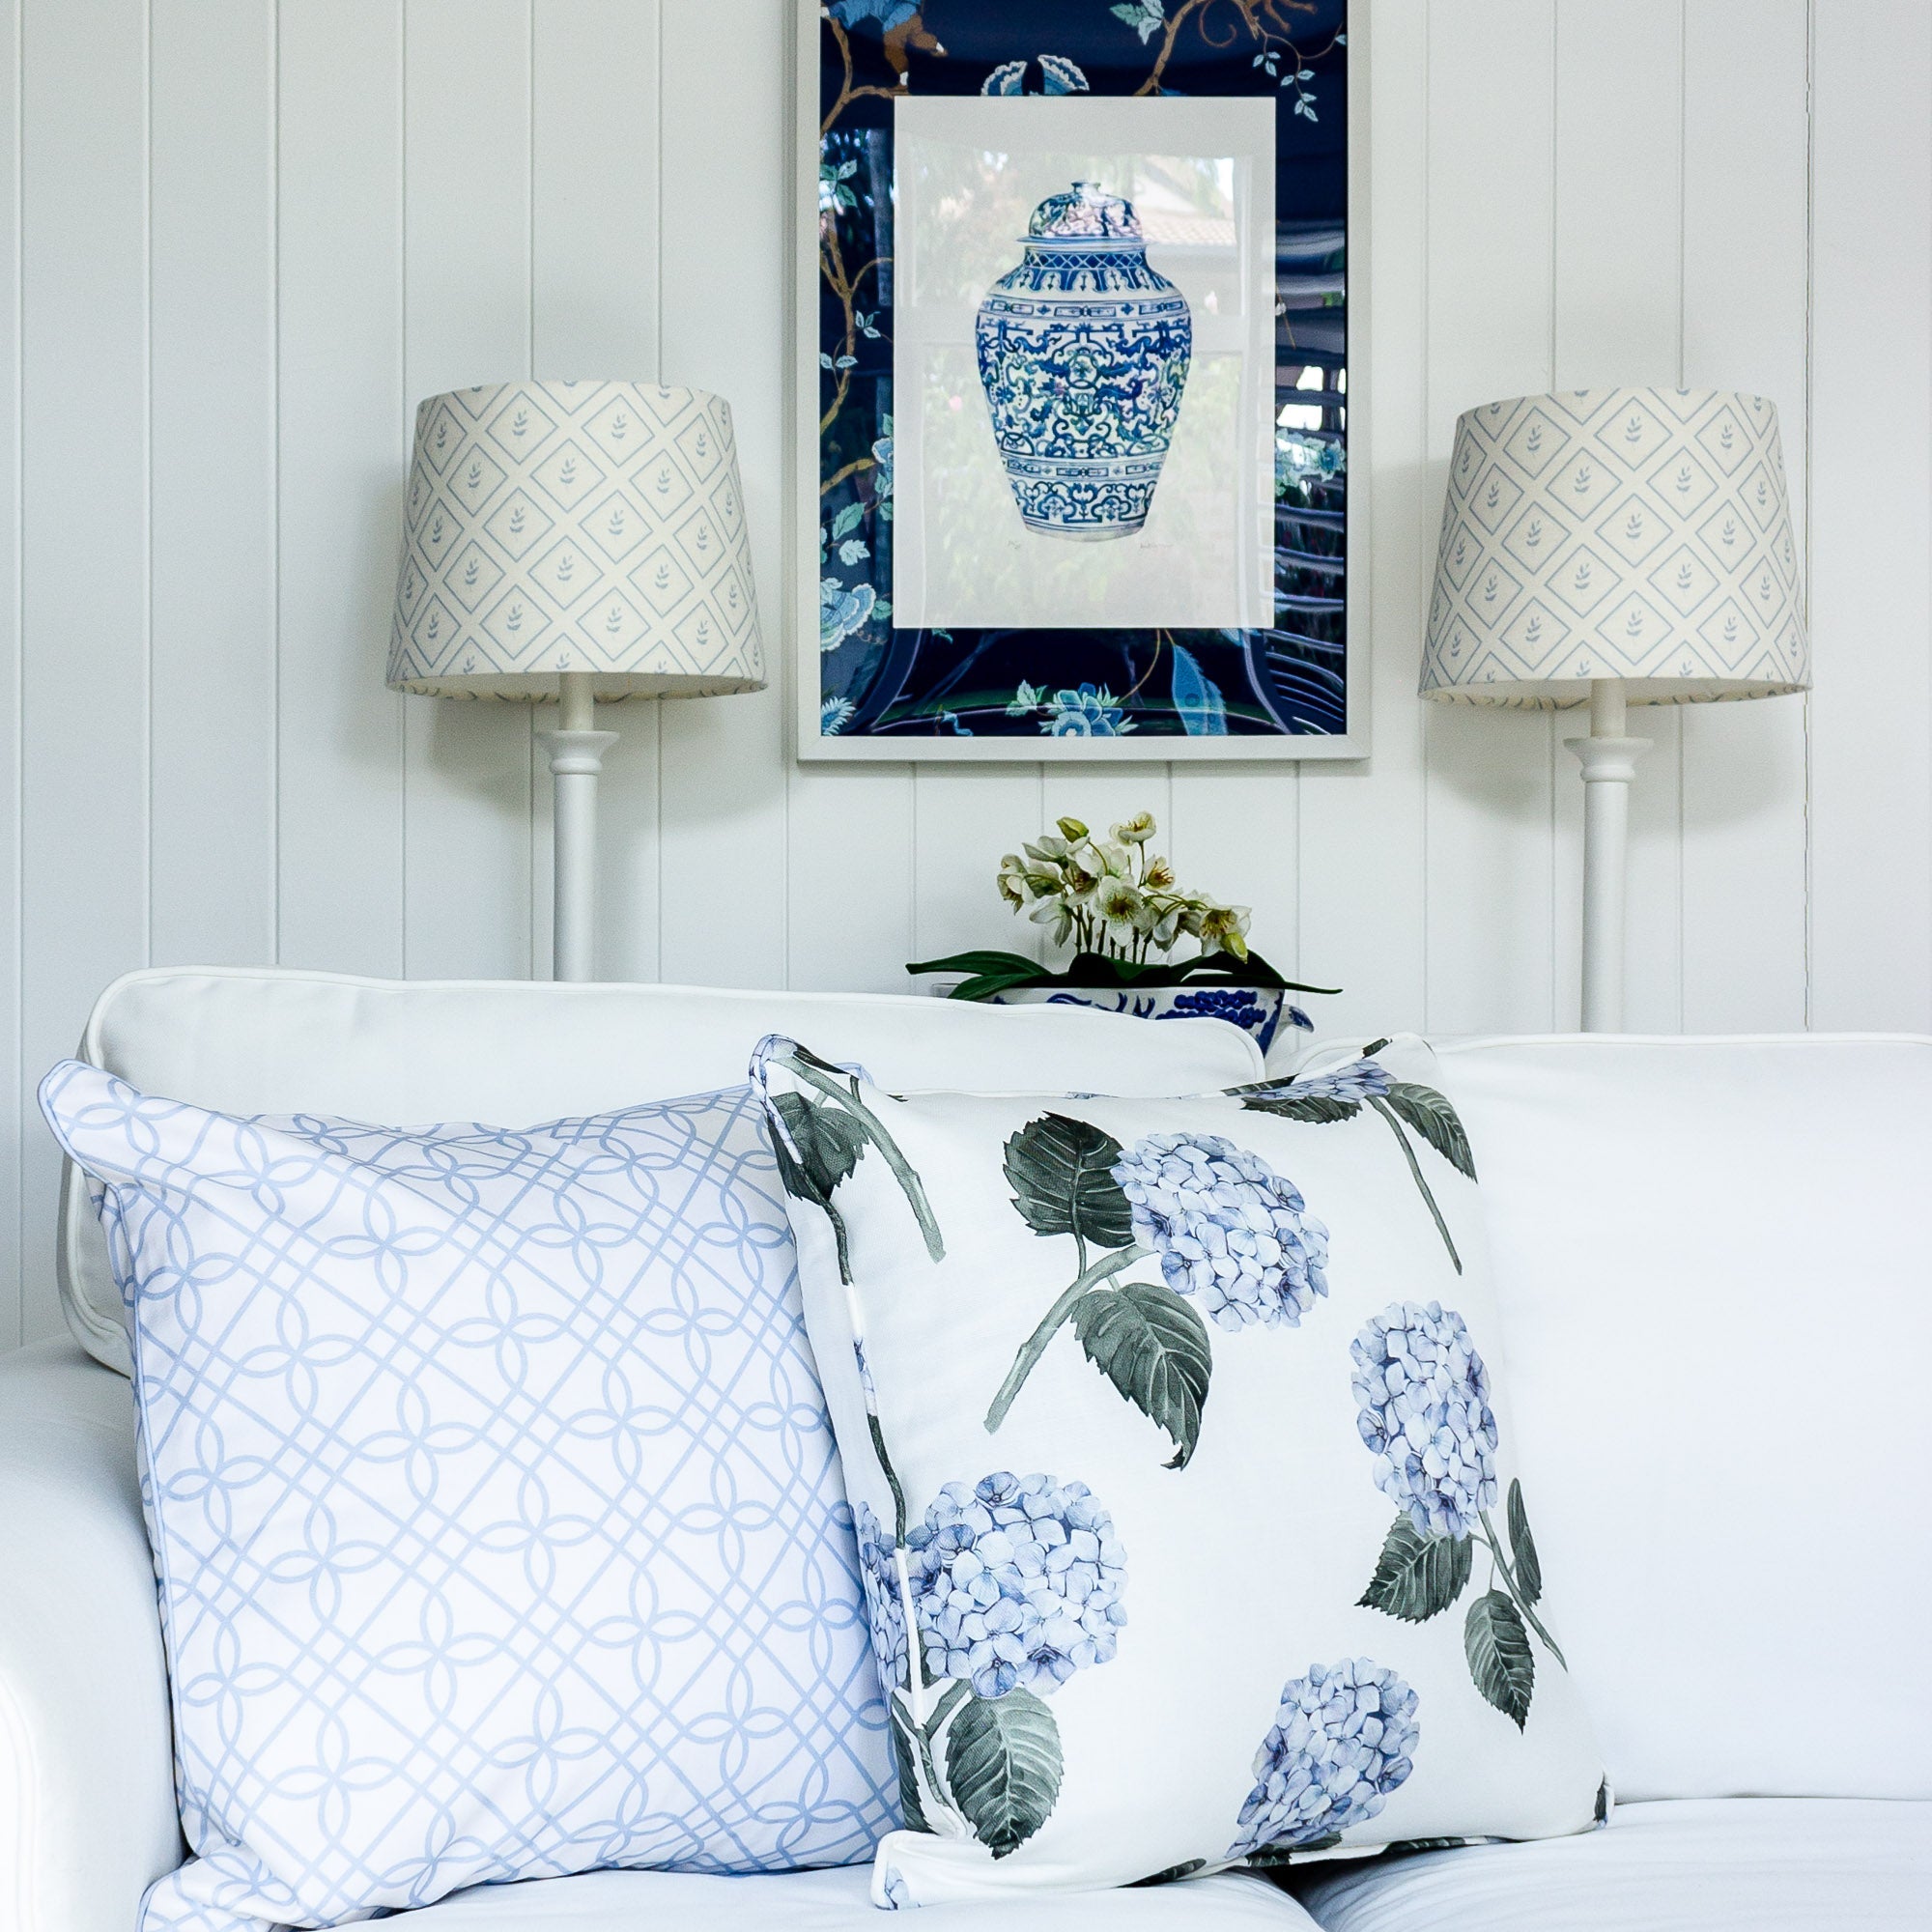 Hydrangea Bloom Blue Cushion - Hydrangea Lane Home